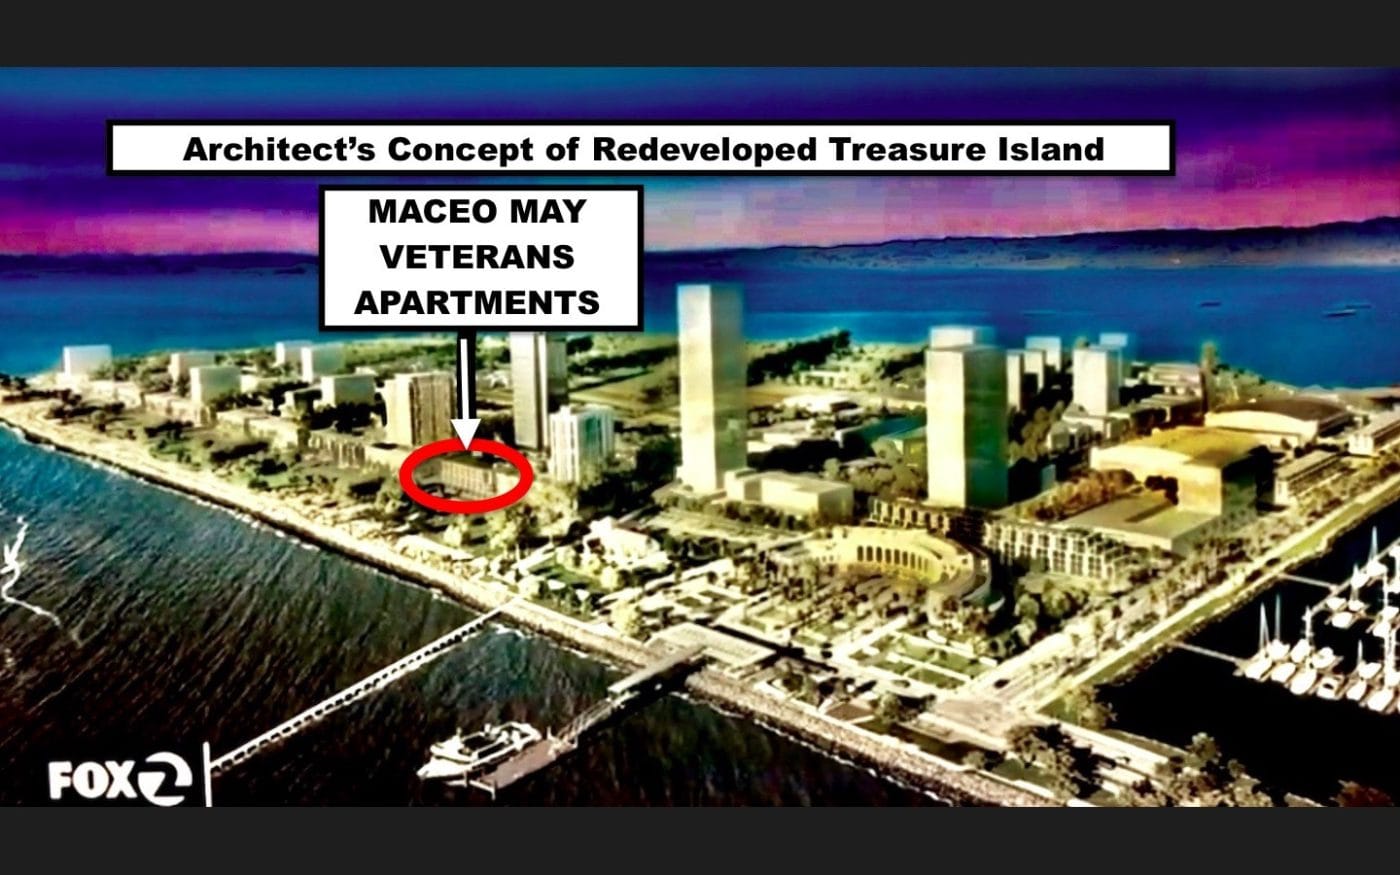 Architectas-redevelopment-illustration-with-Maceo-May-1400x875, Does Treasure Island’s Equity Vision fix problems in Maceo May’s veterans’ housing? , Featured World News & Views 